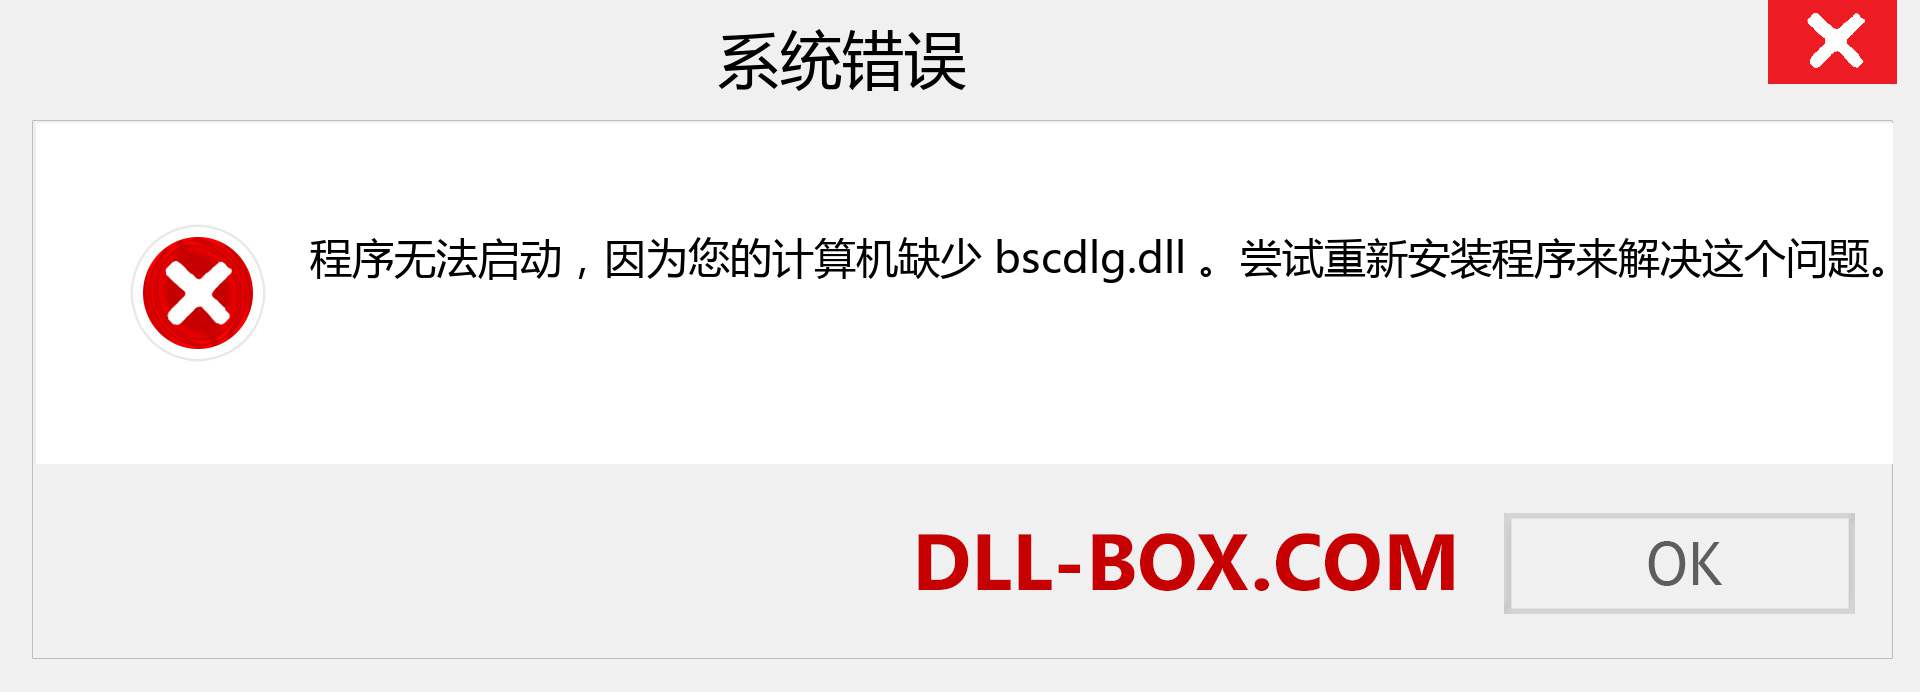 bscdlg.dll 文件丢失？。 适用于 Windows 7、8、10 的下载 - 修复 Windows、照片、图像上的 bscdlg dll 丢失错误